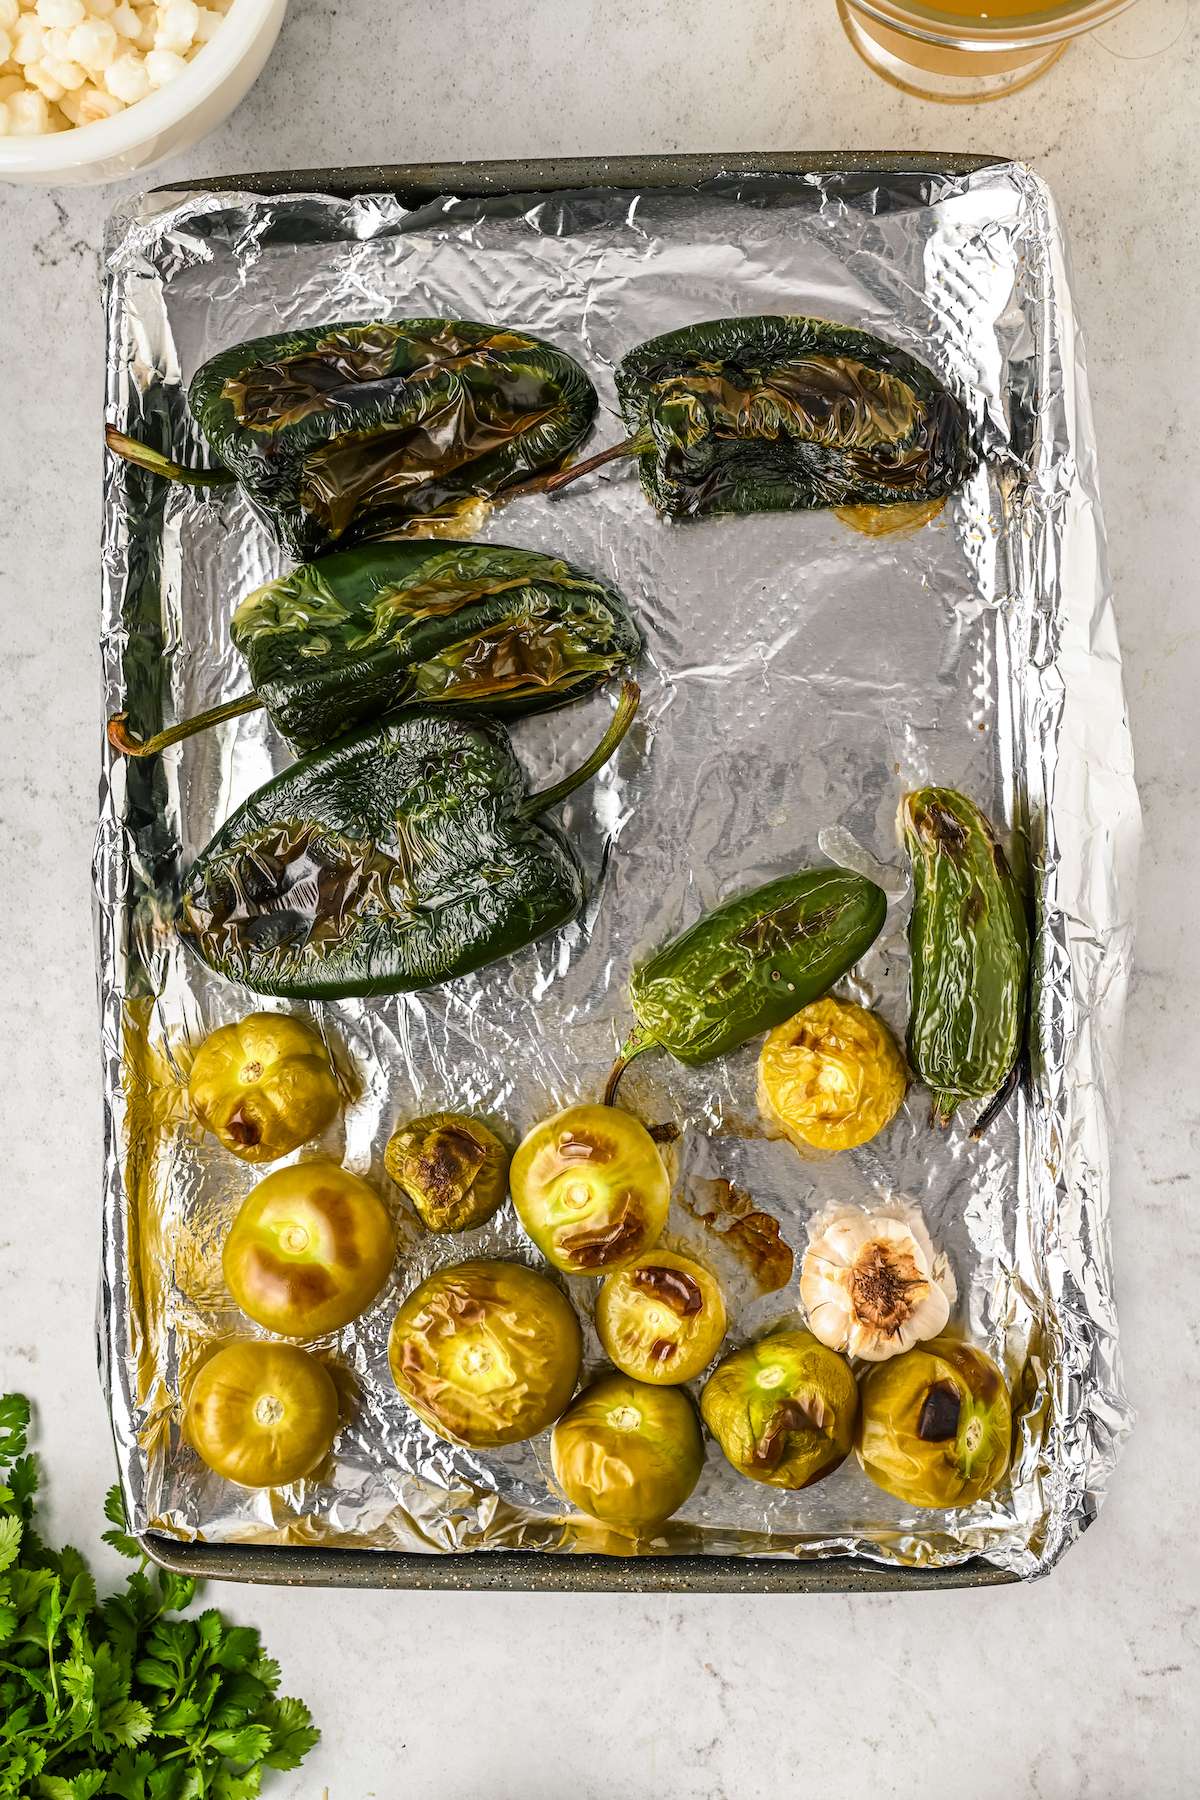 Charred poblanos, tomatillos, and jalapeños in the baking tray.